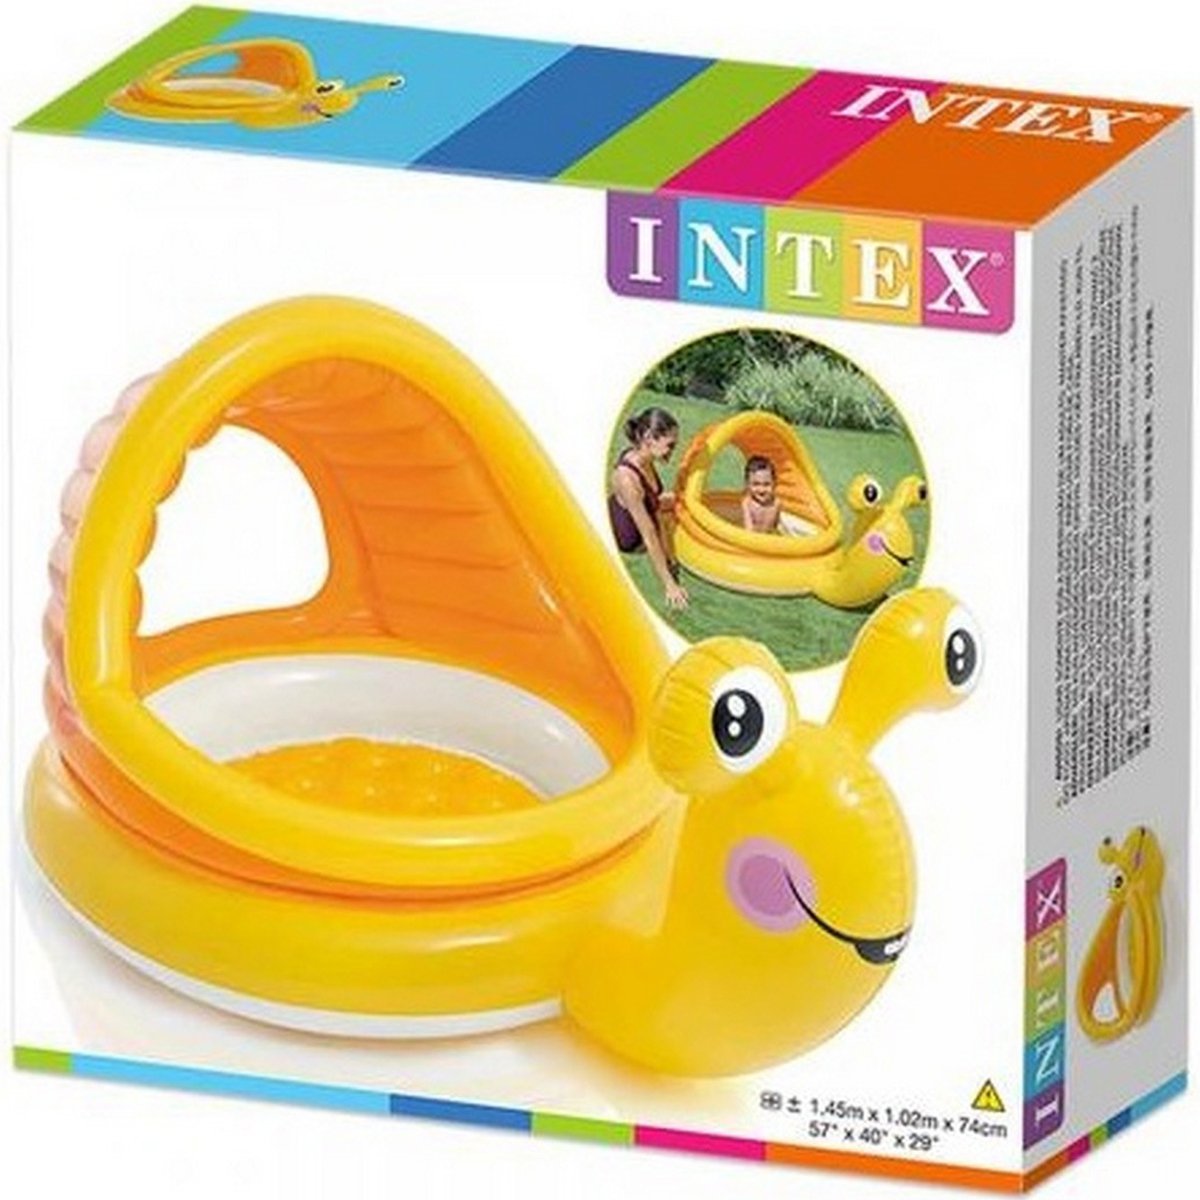 Intex Baby Snail Pool with Sunshade 57124